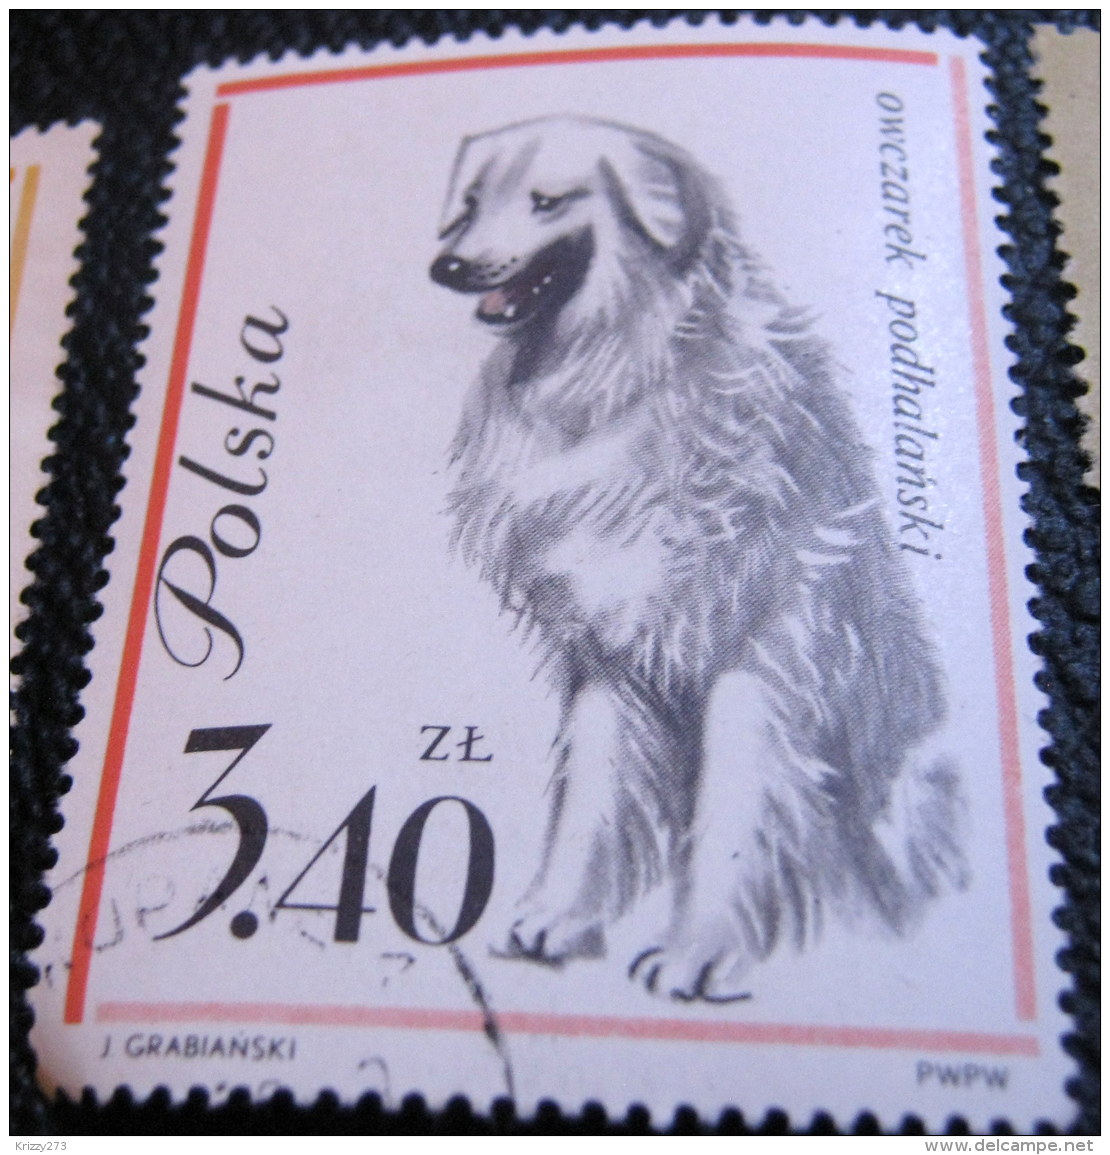 Poland 1963 Dog Owczarek Podhalanski 3.40zl - Used - Used Stamps